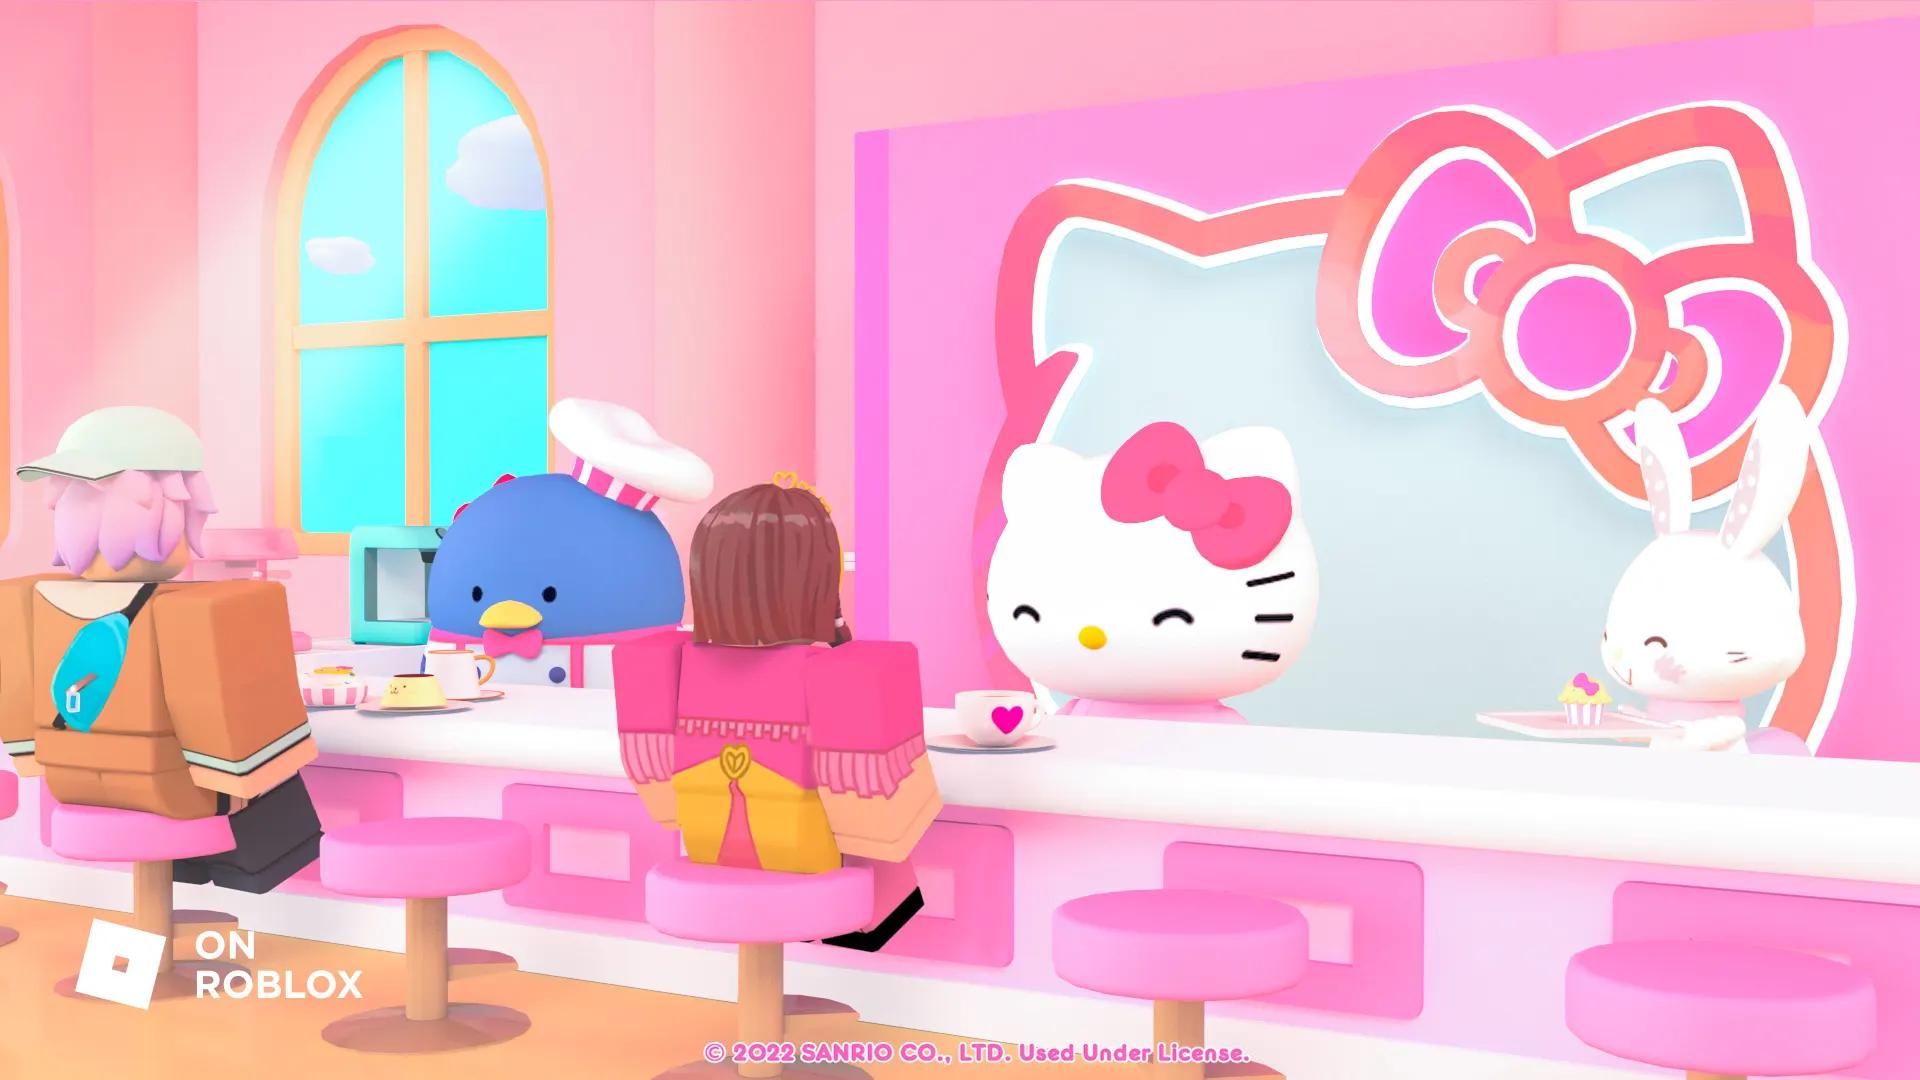 International Friendship Day Wallpaper, My Hello Kitty Cafe Wiki